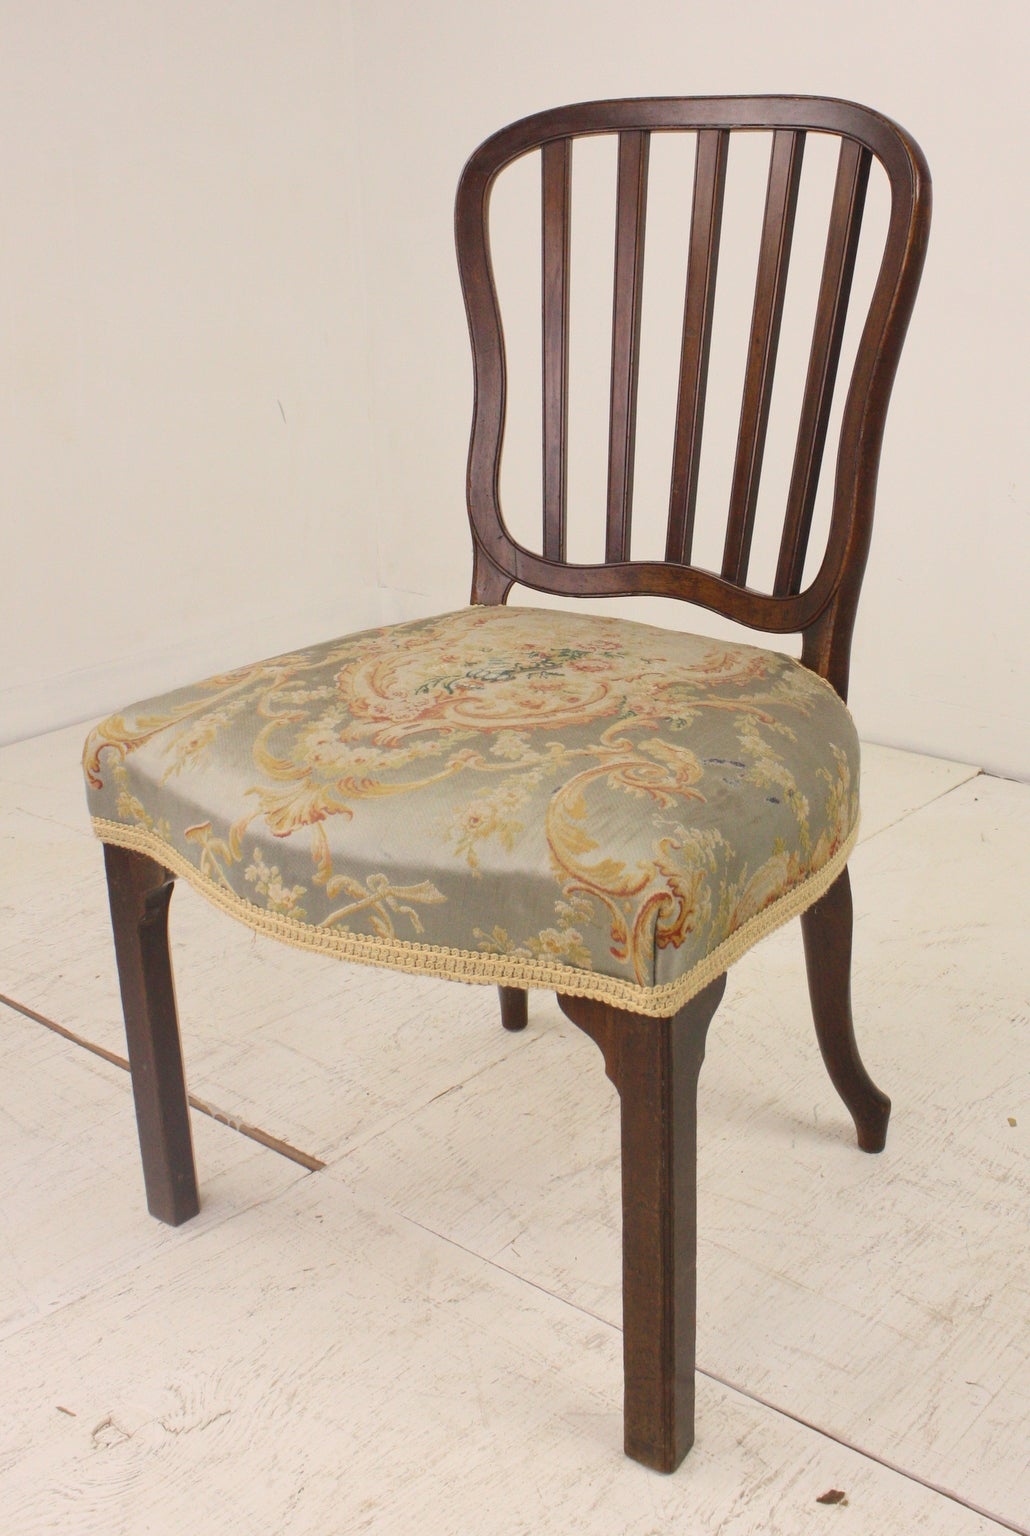 Antique Georgian English Lady's Desk Chair, Old Petit Point Seat